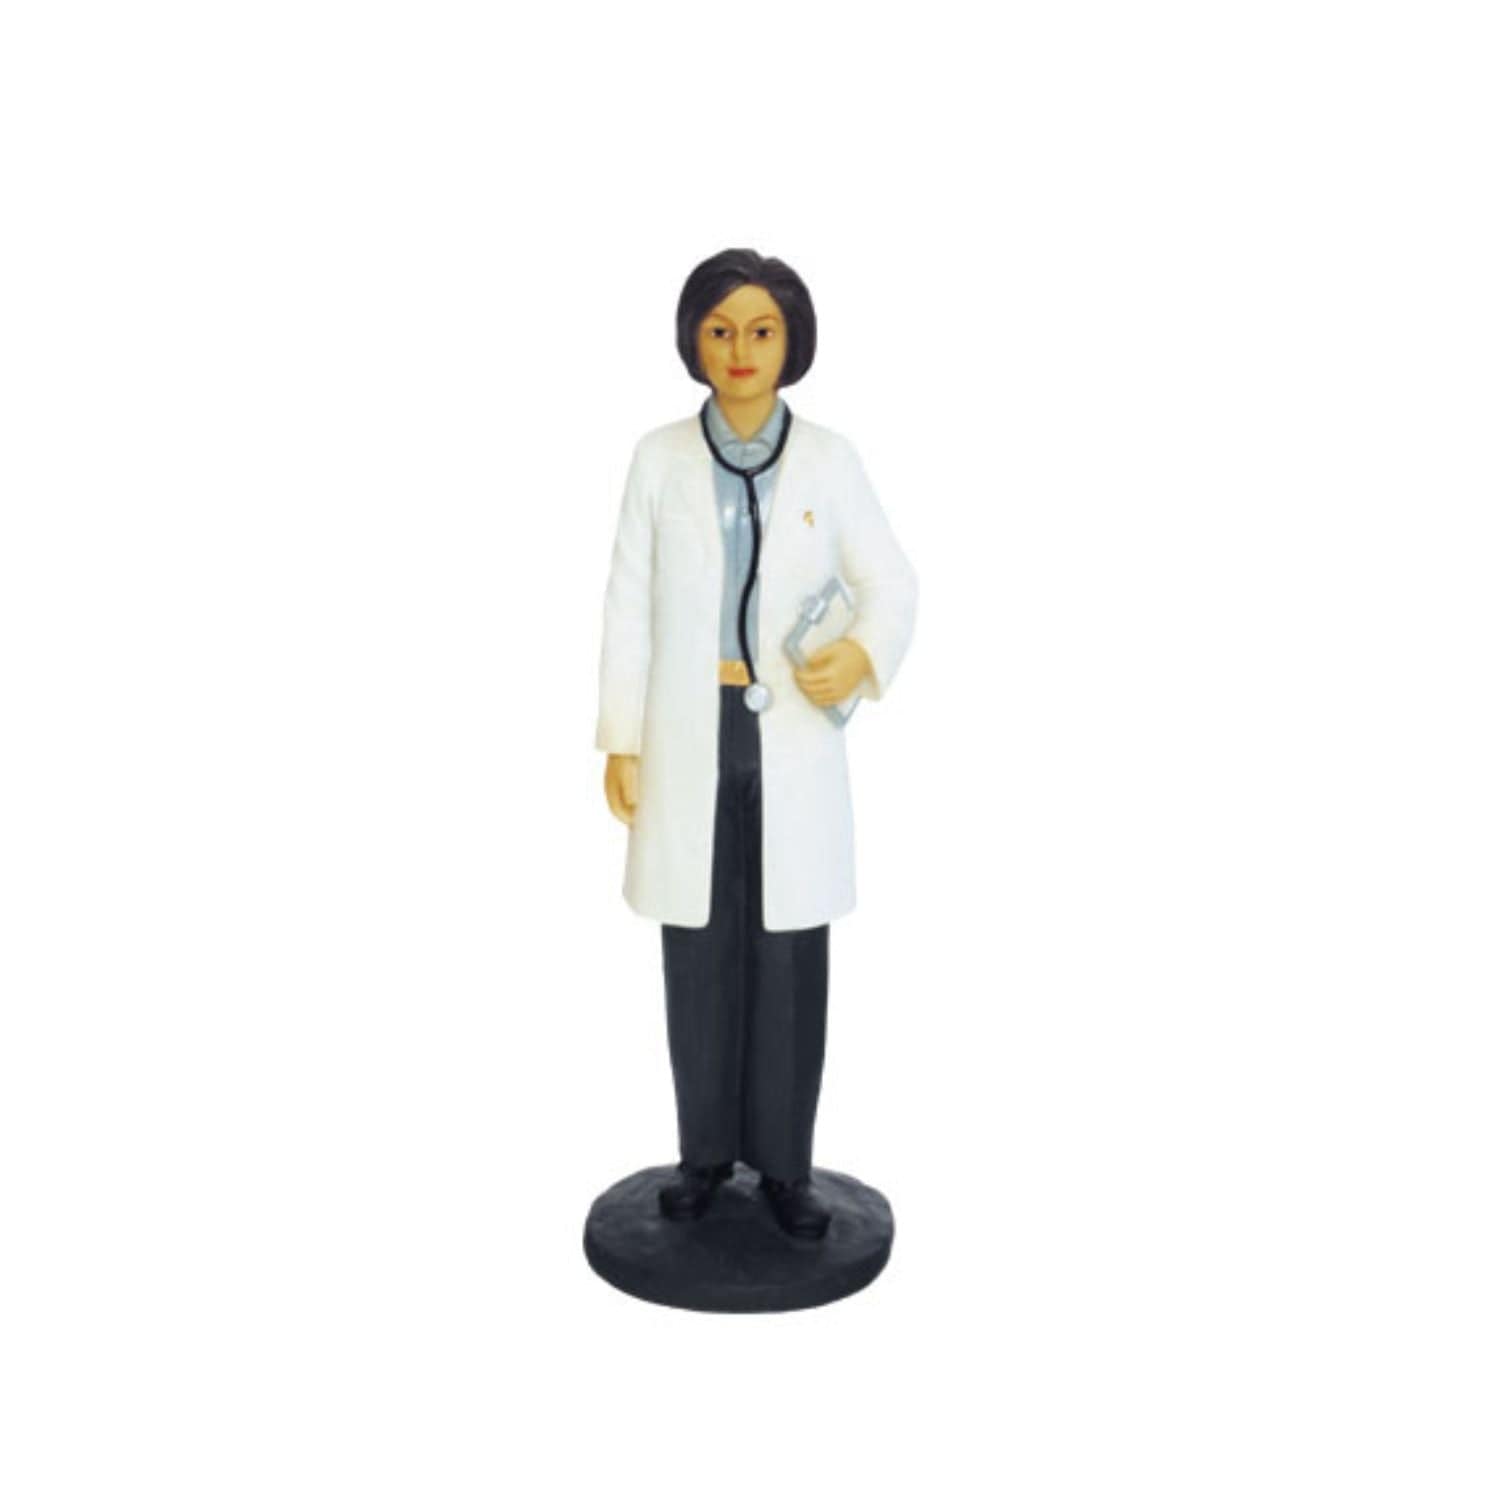 Positive Image Desk Decor Doctor Figurine - White Female